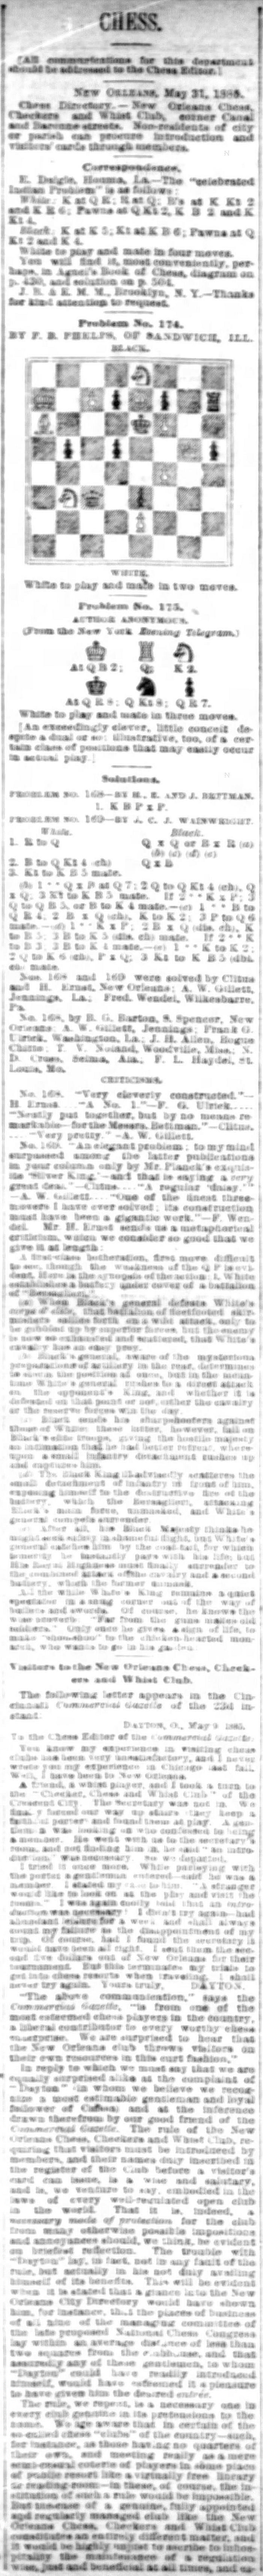 1885.05.31-01 New Orleans Times-Democrat.jpg